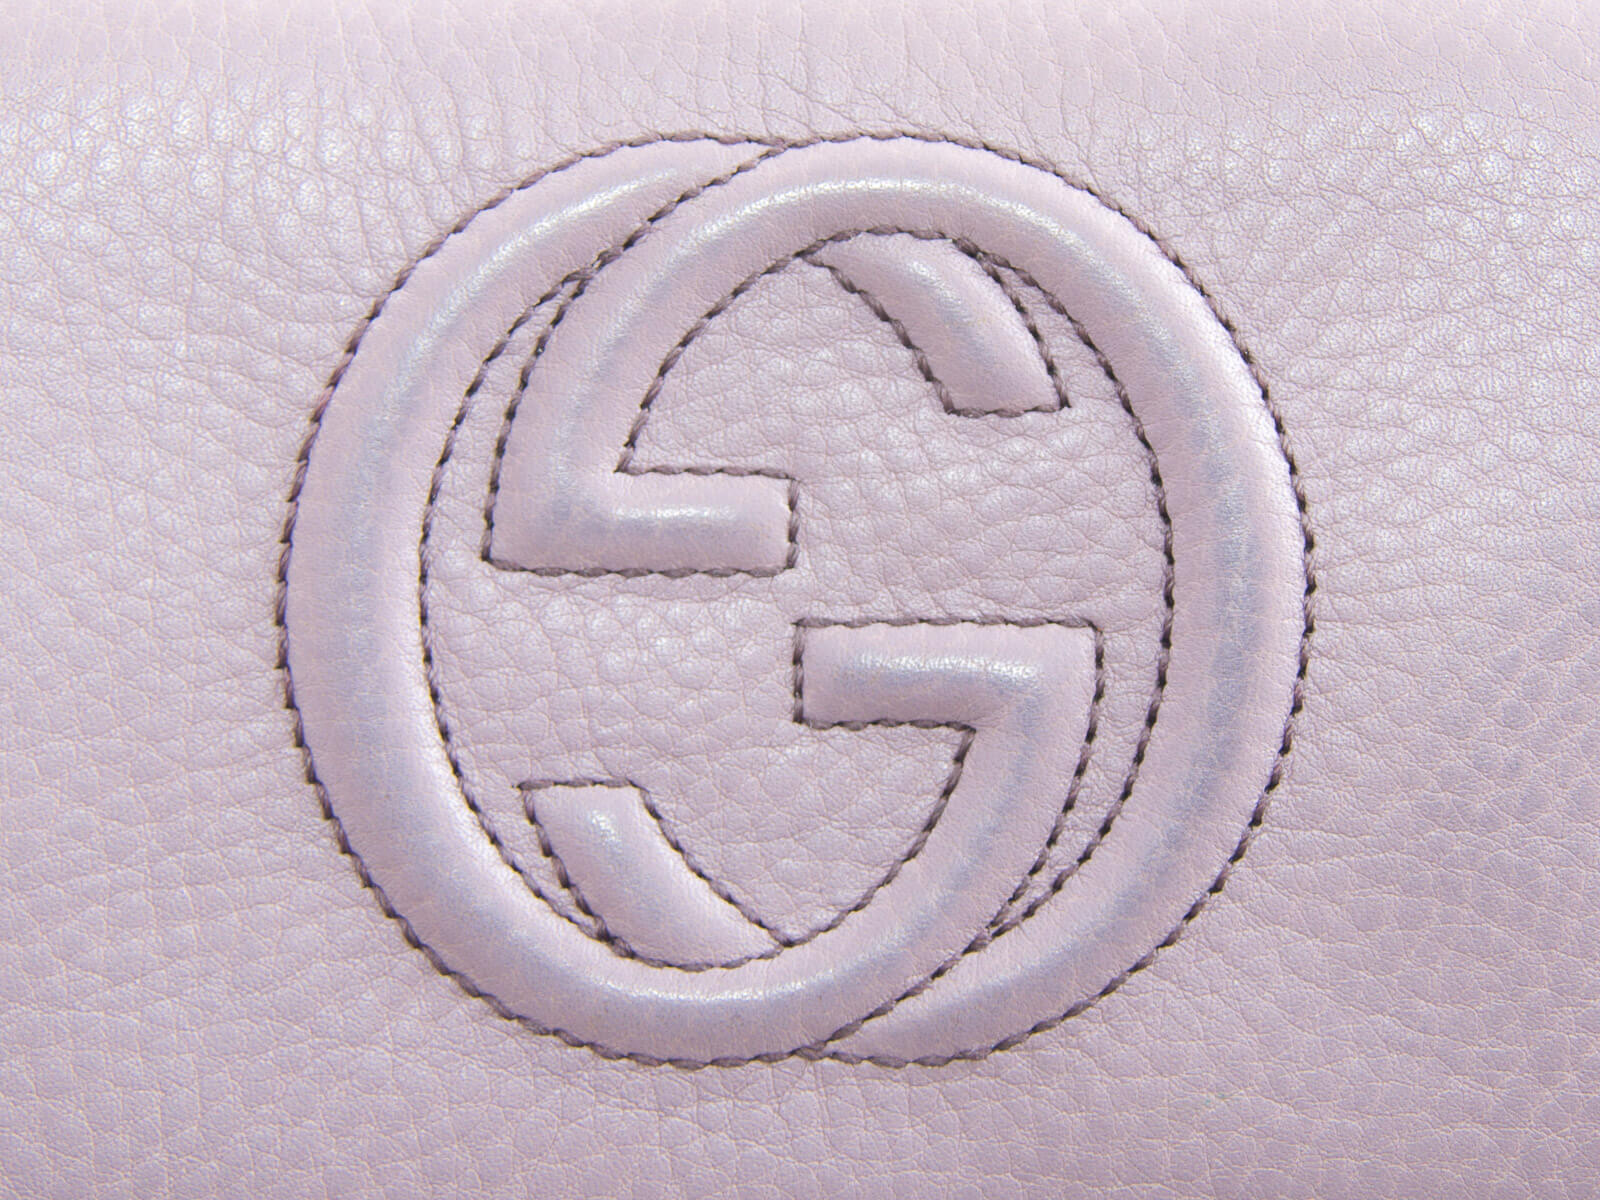 authentic gucci symbol